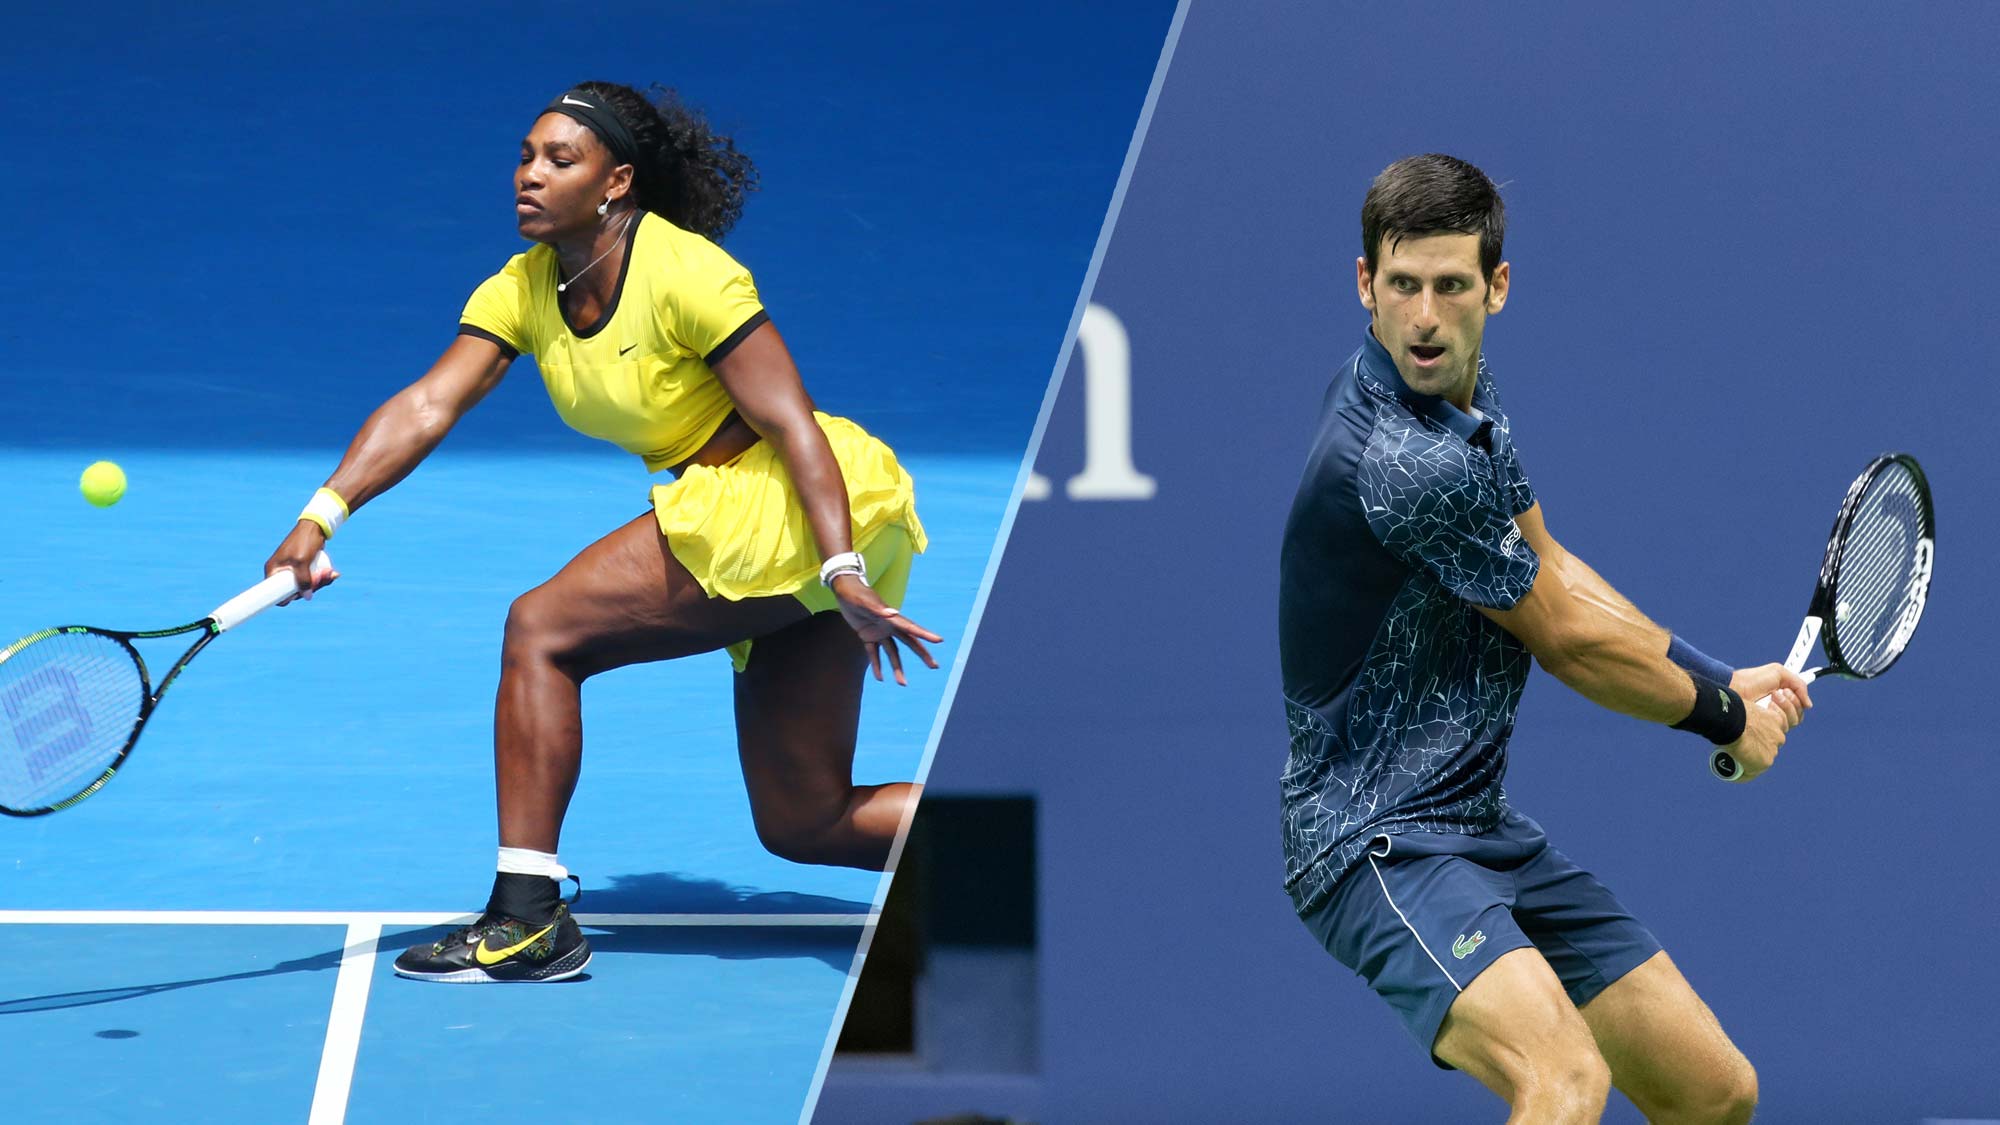 Serena Williams (L) and Novak Djokovic perform at the US Open